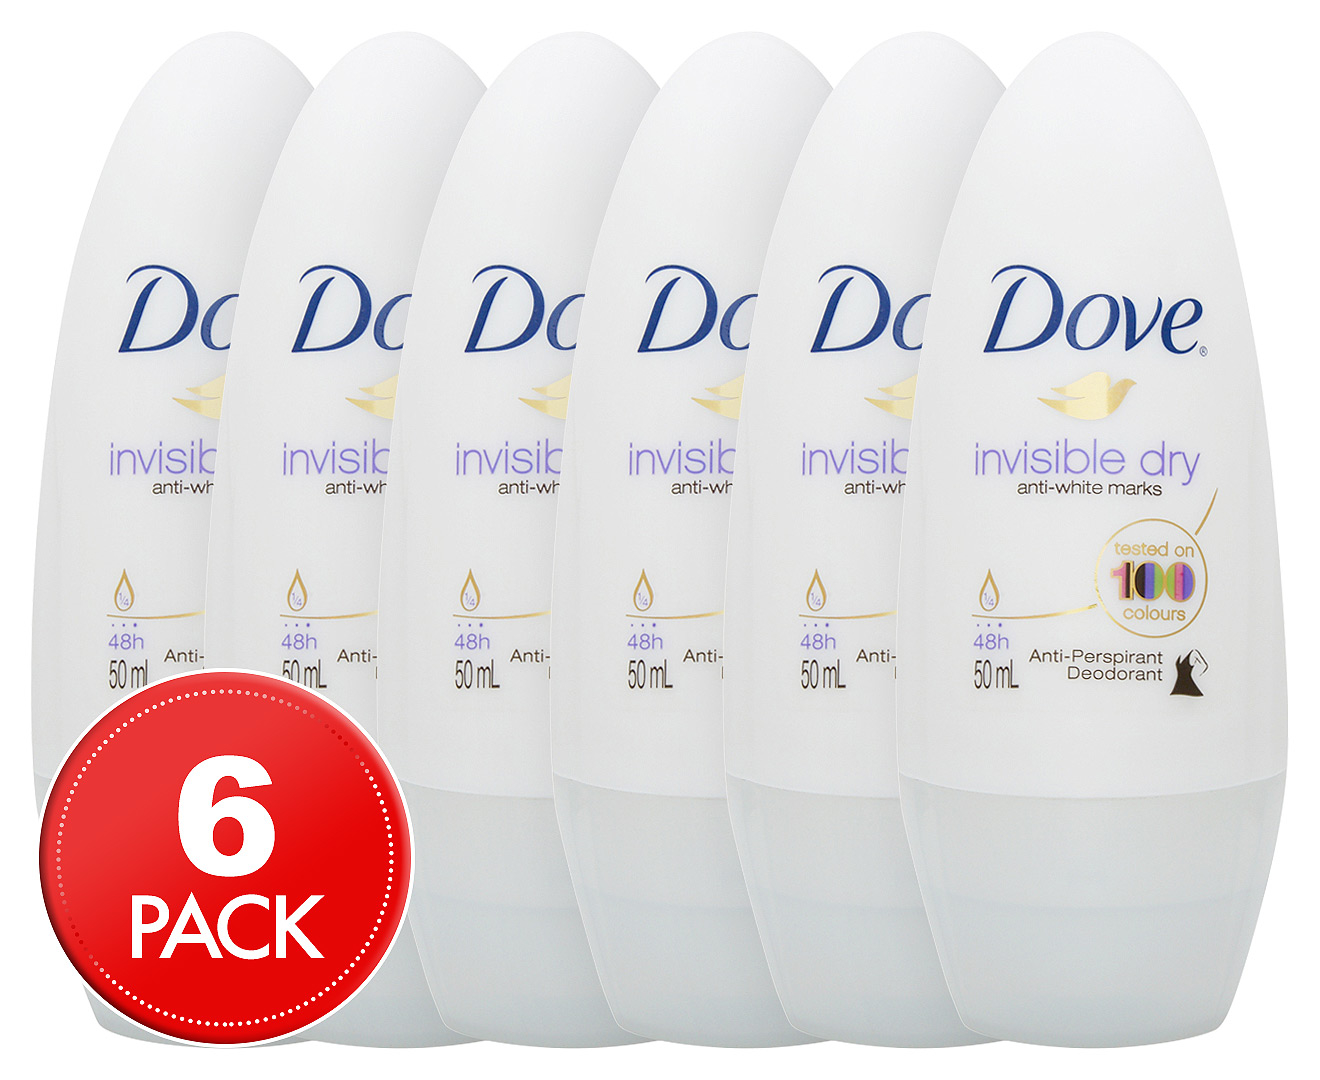 6 x Dove Deodorant Invisible Dry Stick Original 50mL